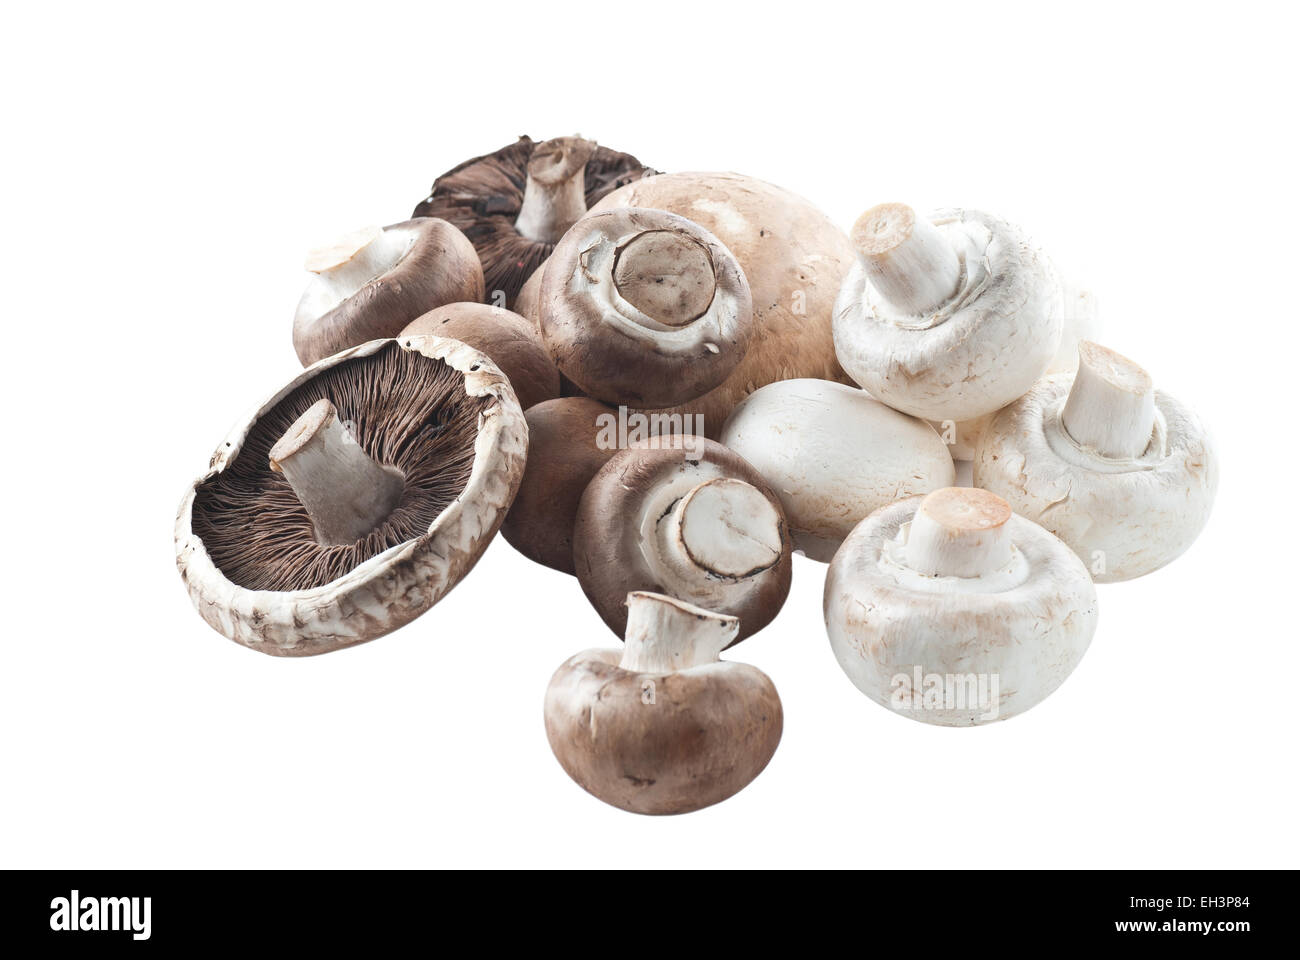 White mushroom, portabello and brown forest mushroom. Stock Photo